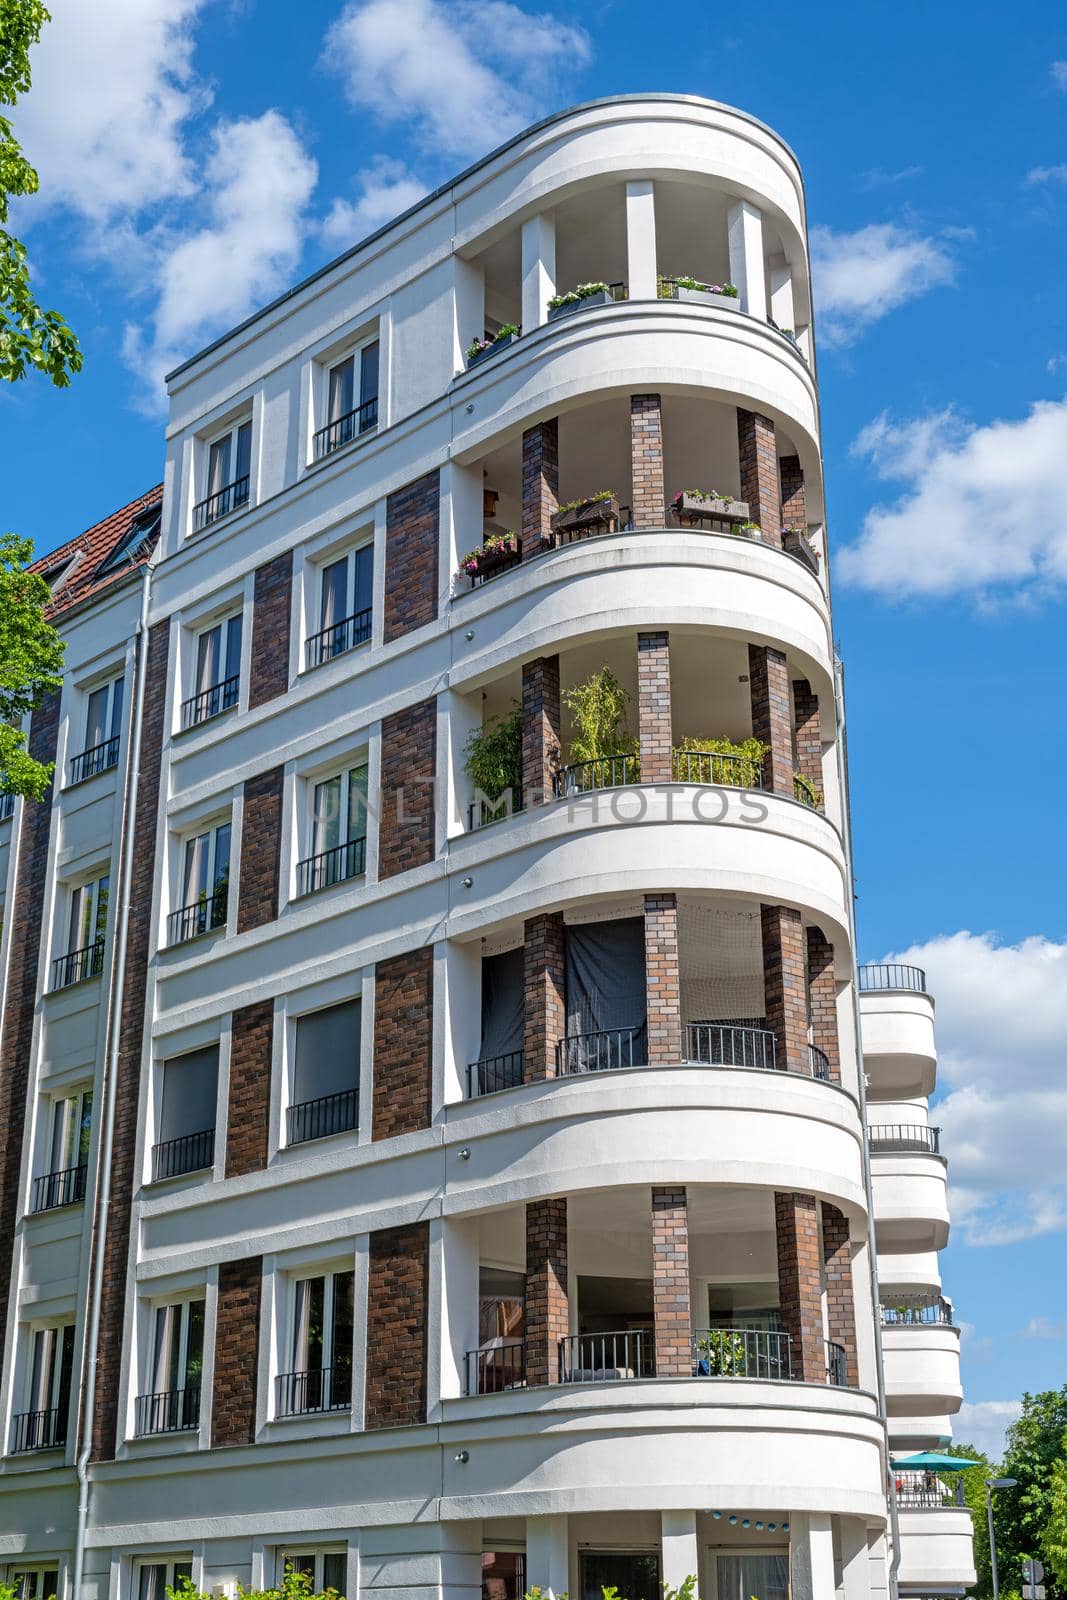 Modern white upscale apartment block seen in Berlin, Germany